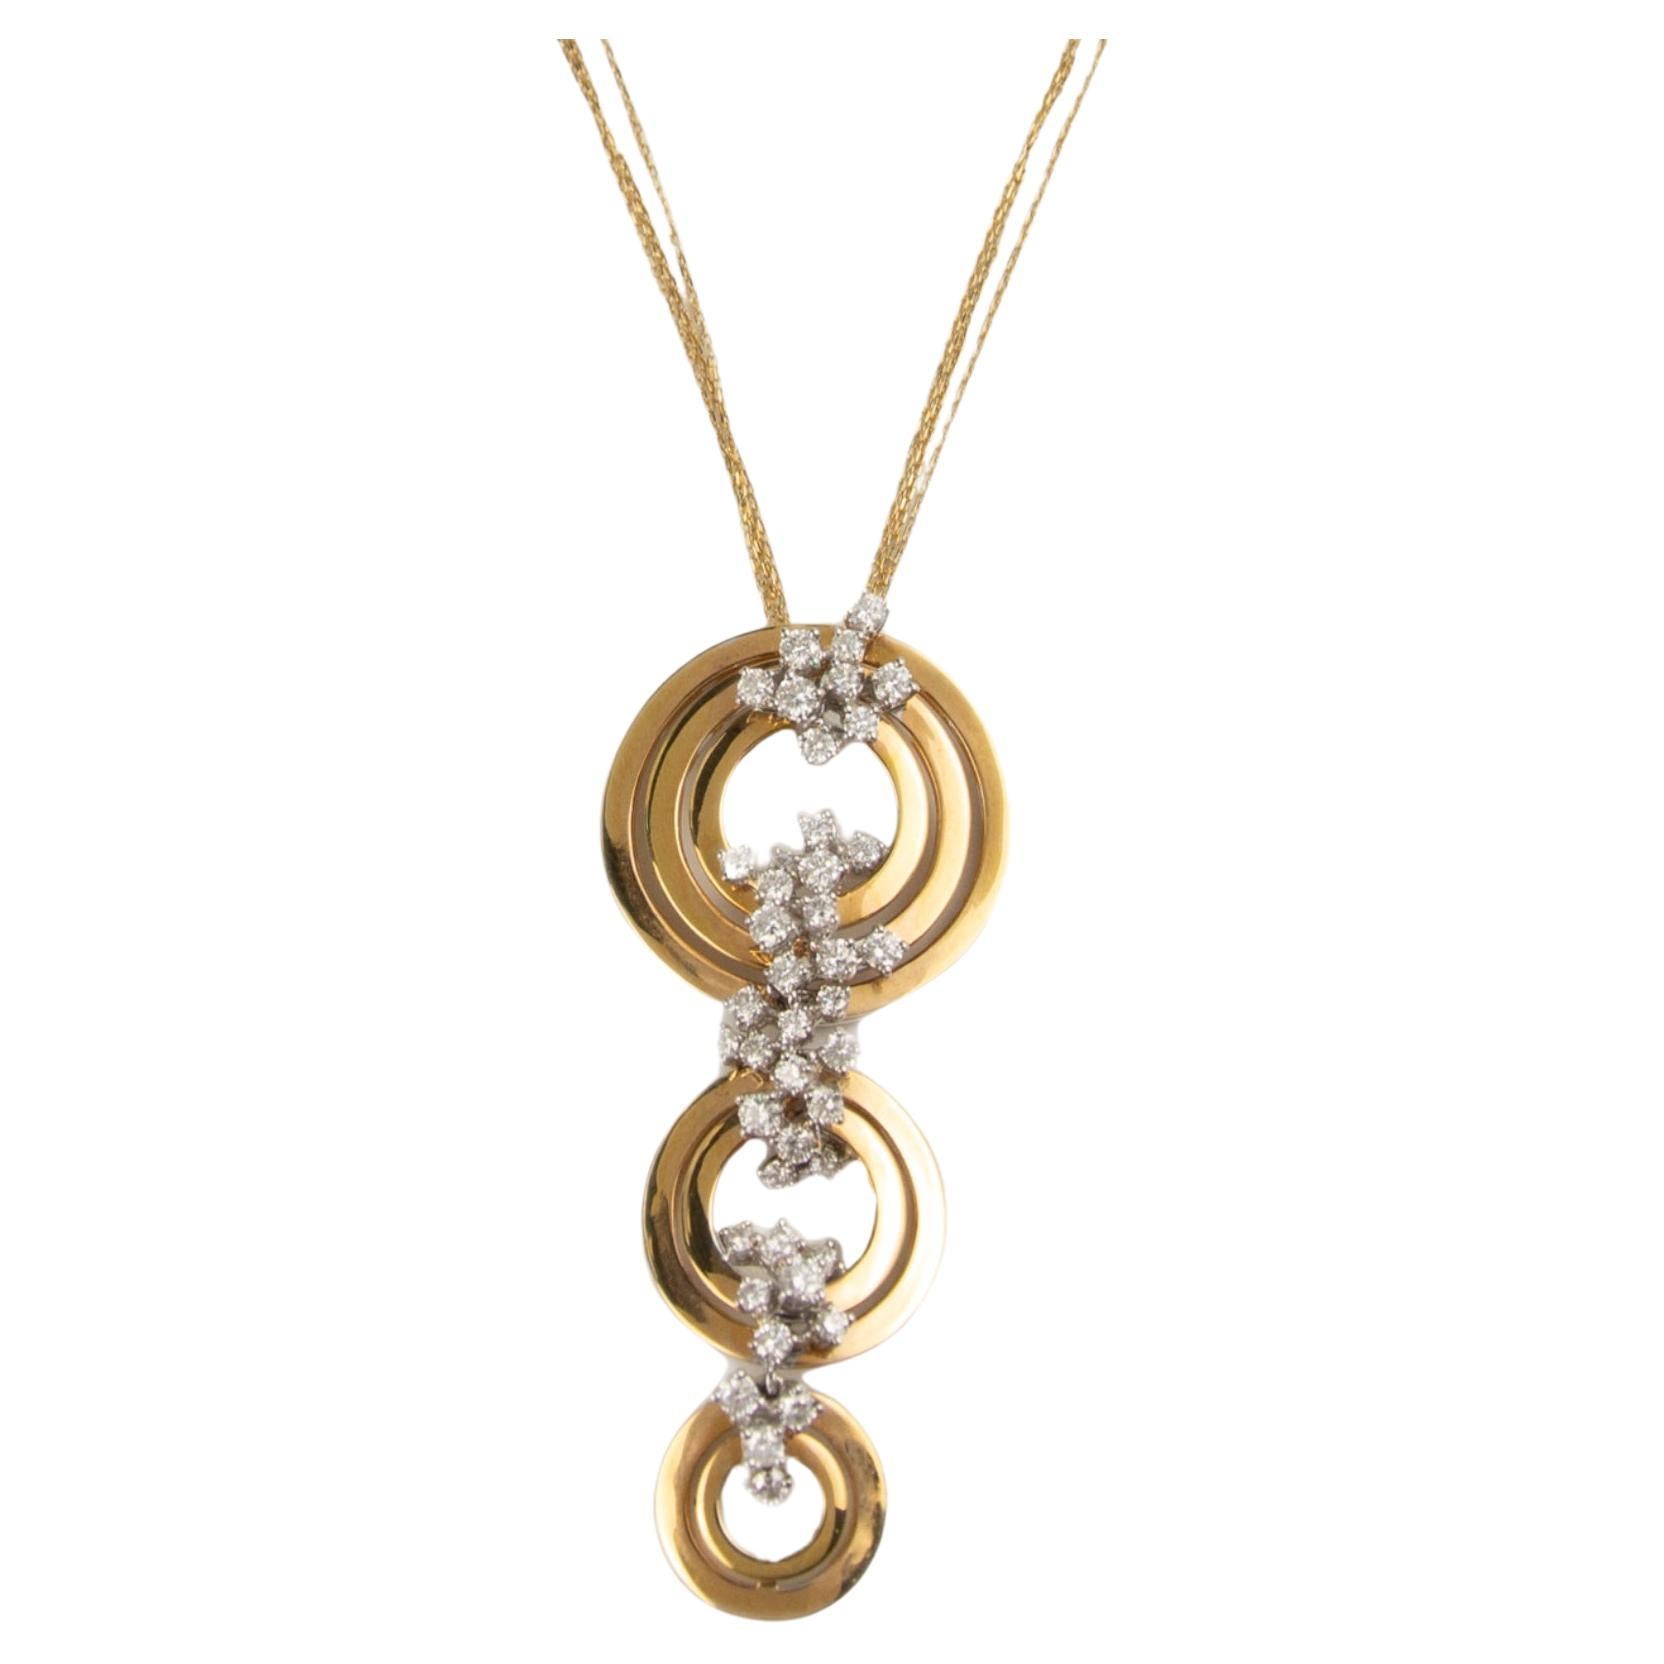 Damiani Necklace
Sophia Loren Collection
18K Rose Gold
Diamonds: 2.32ctw